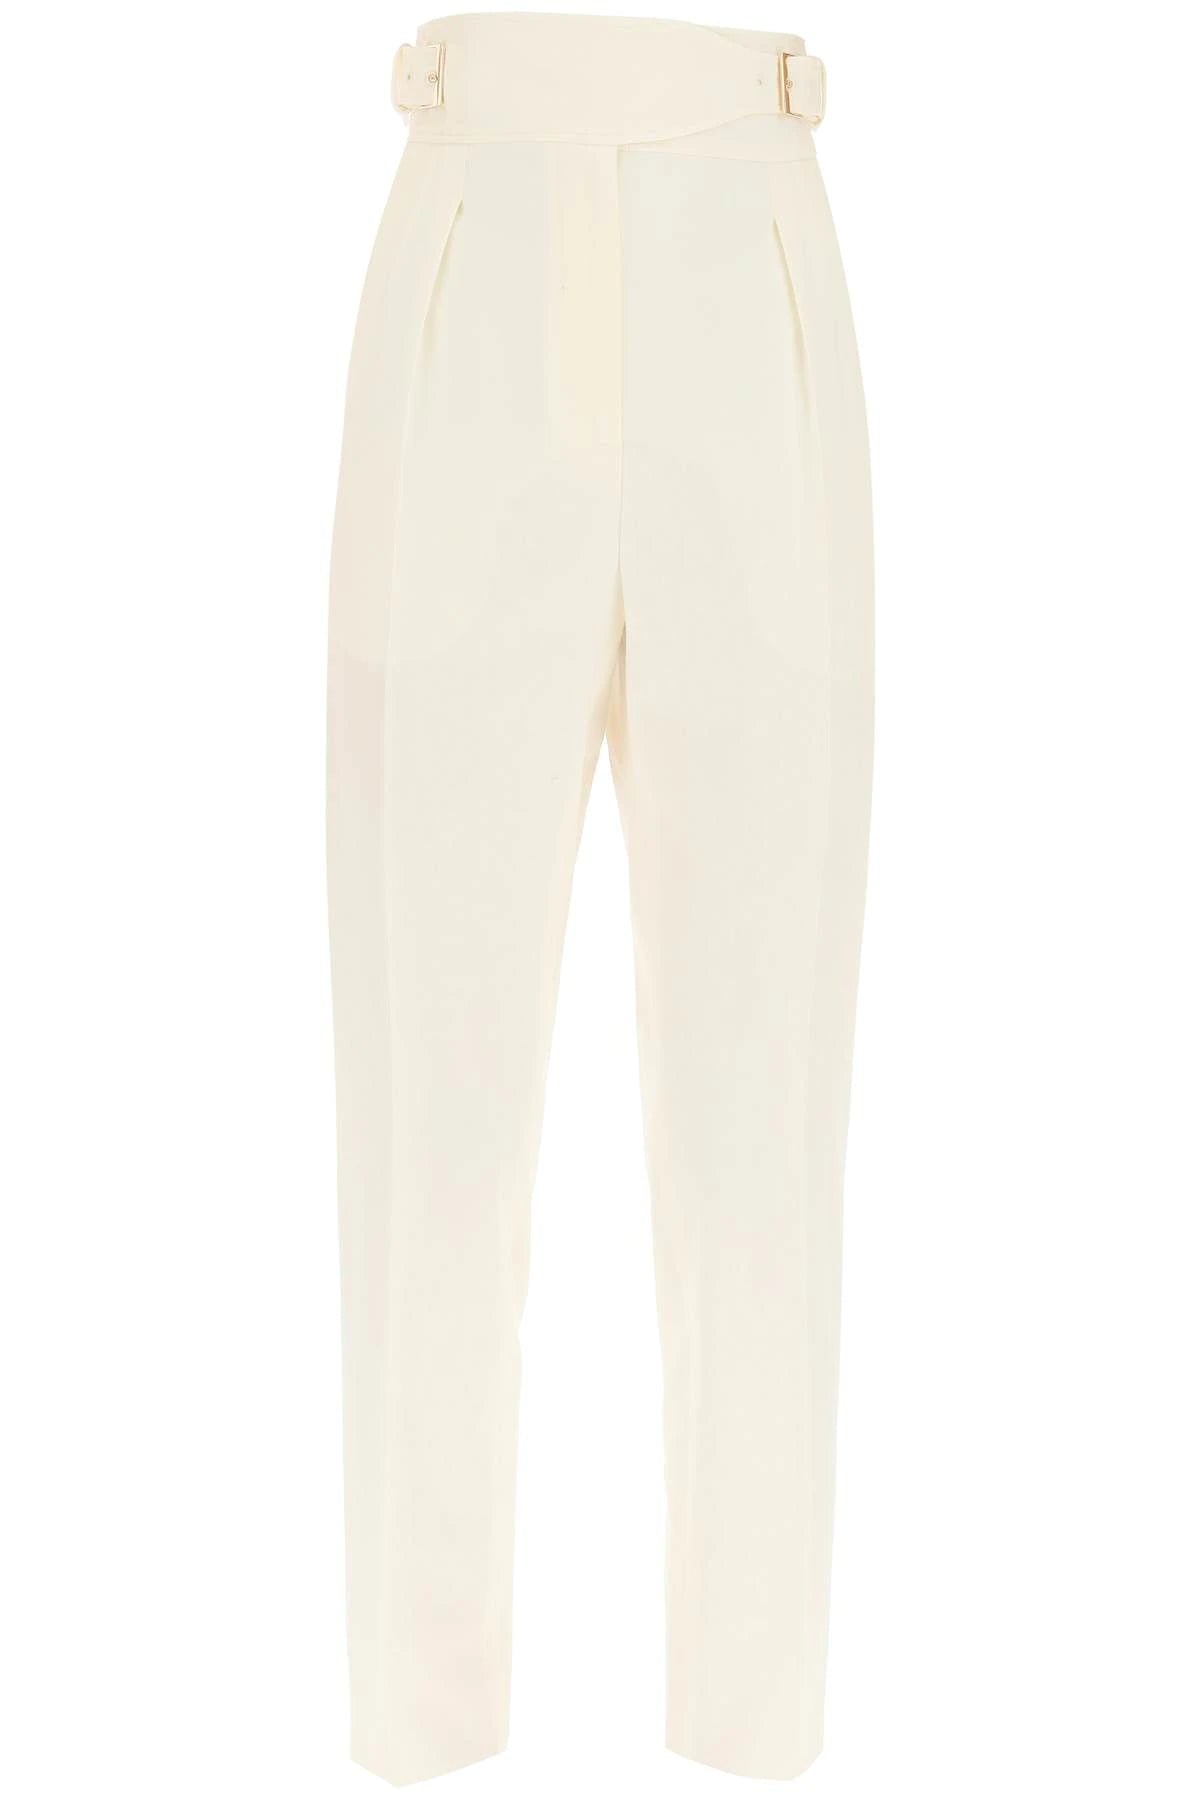 MaxMara STUDIO - Scrigno Long Trouser in Cream